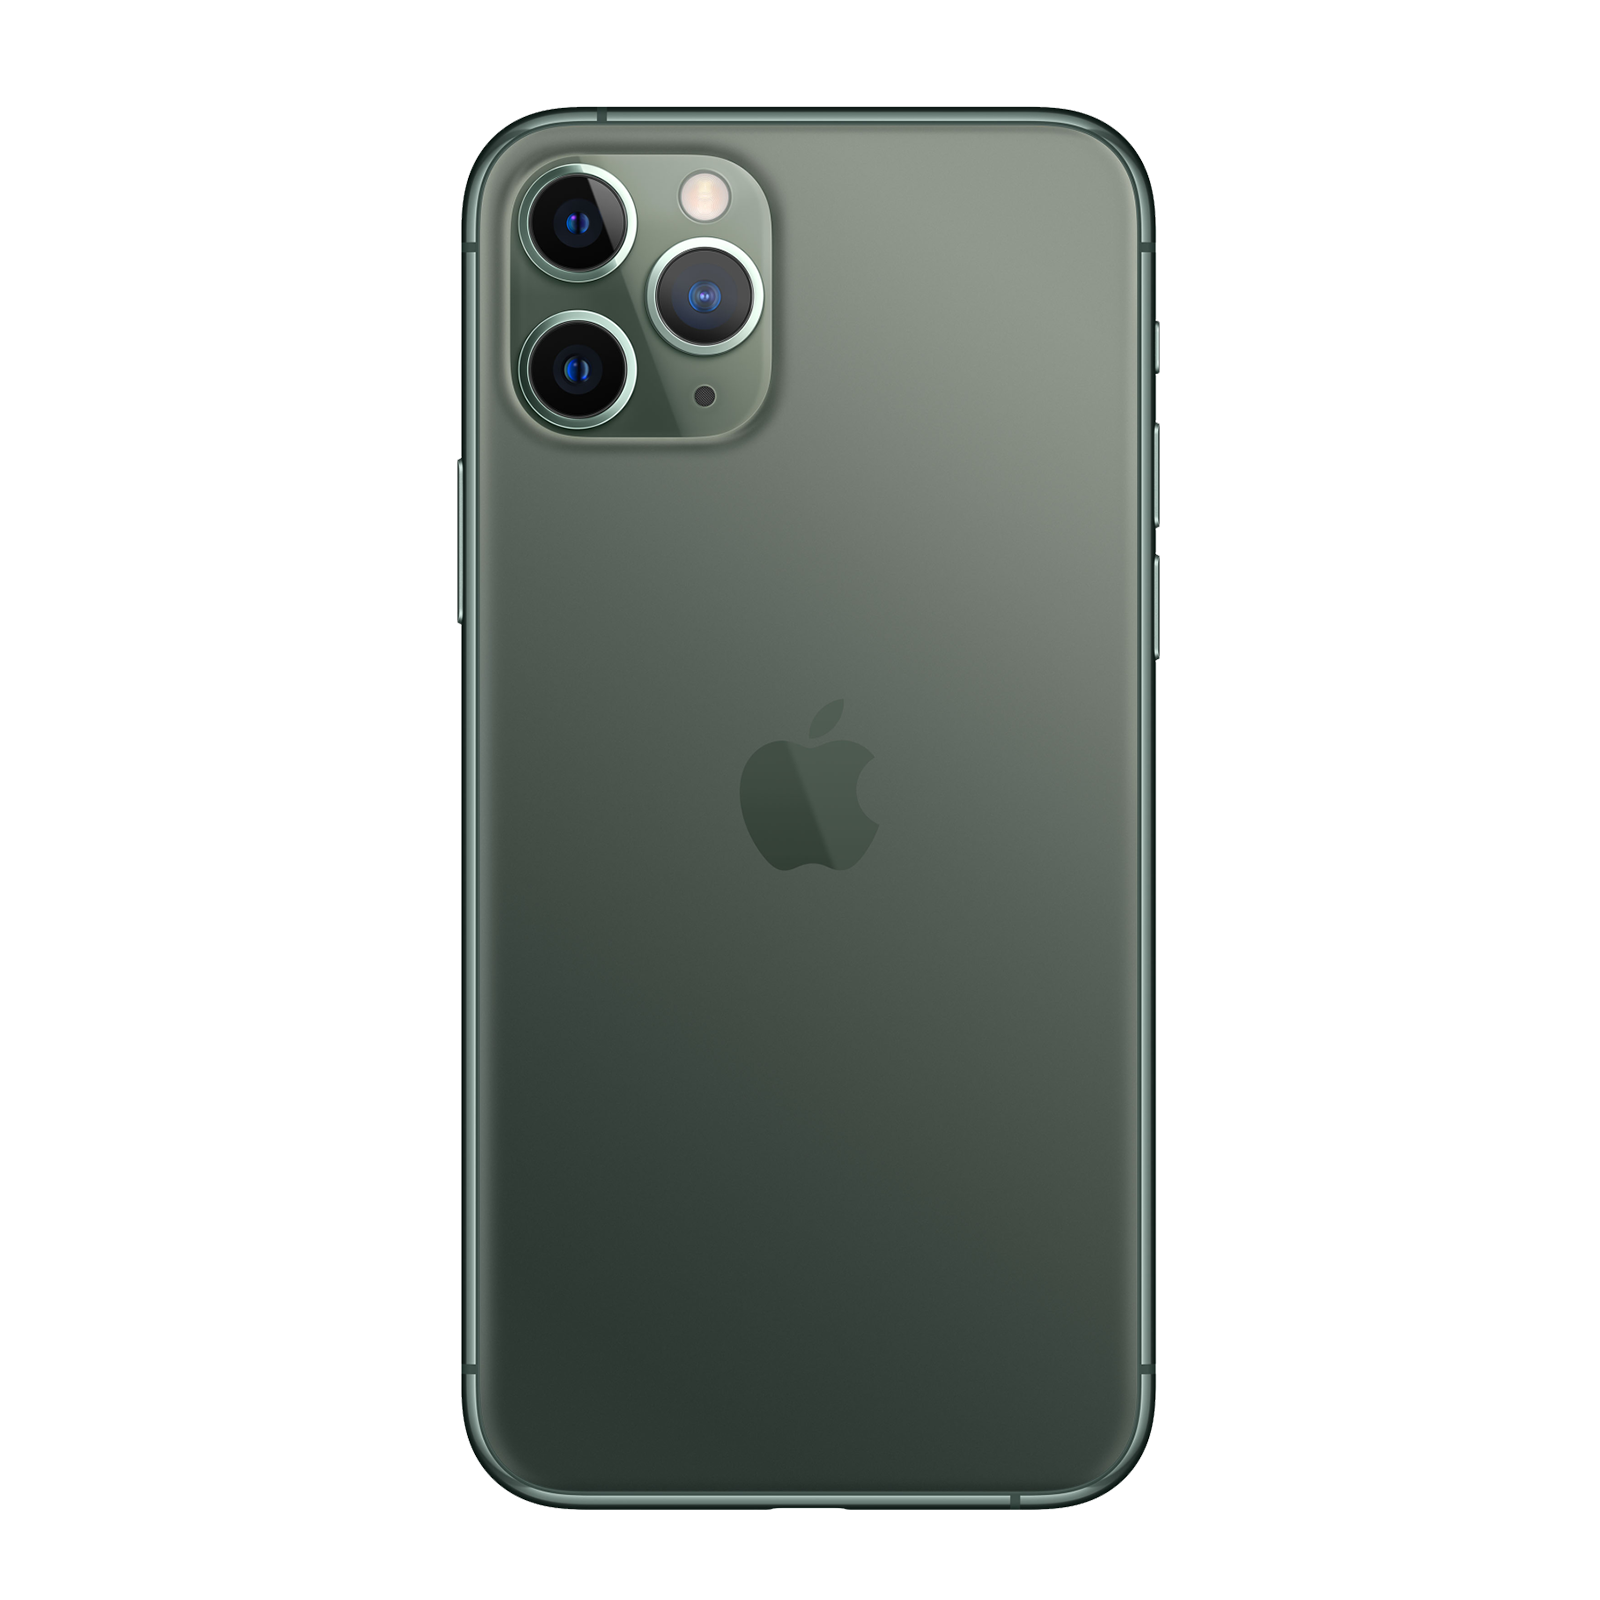 Apple iPhone 11 Pro 256GB Midnight Green Good - AT&T